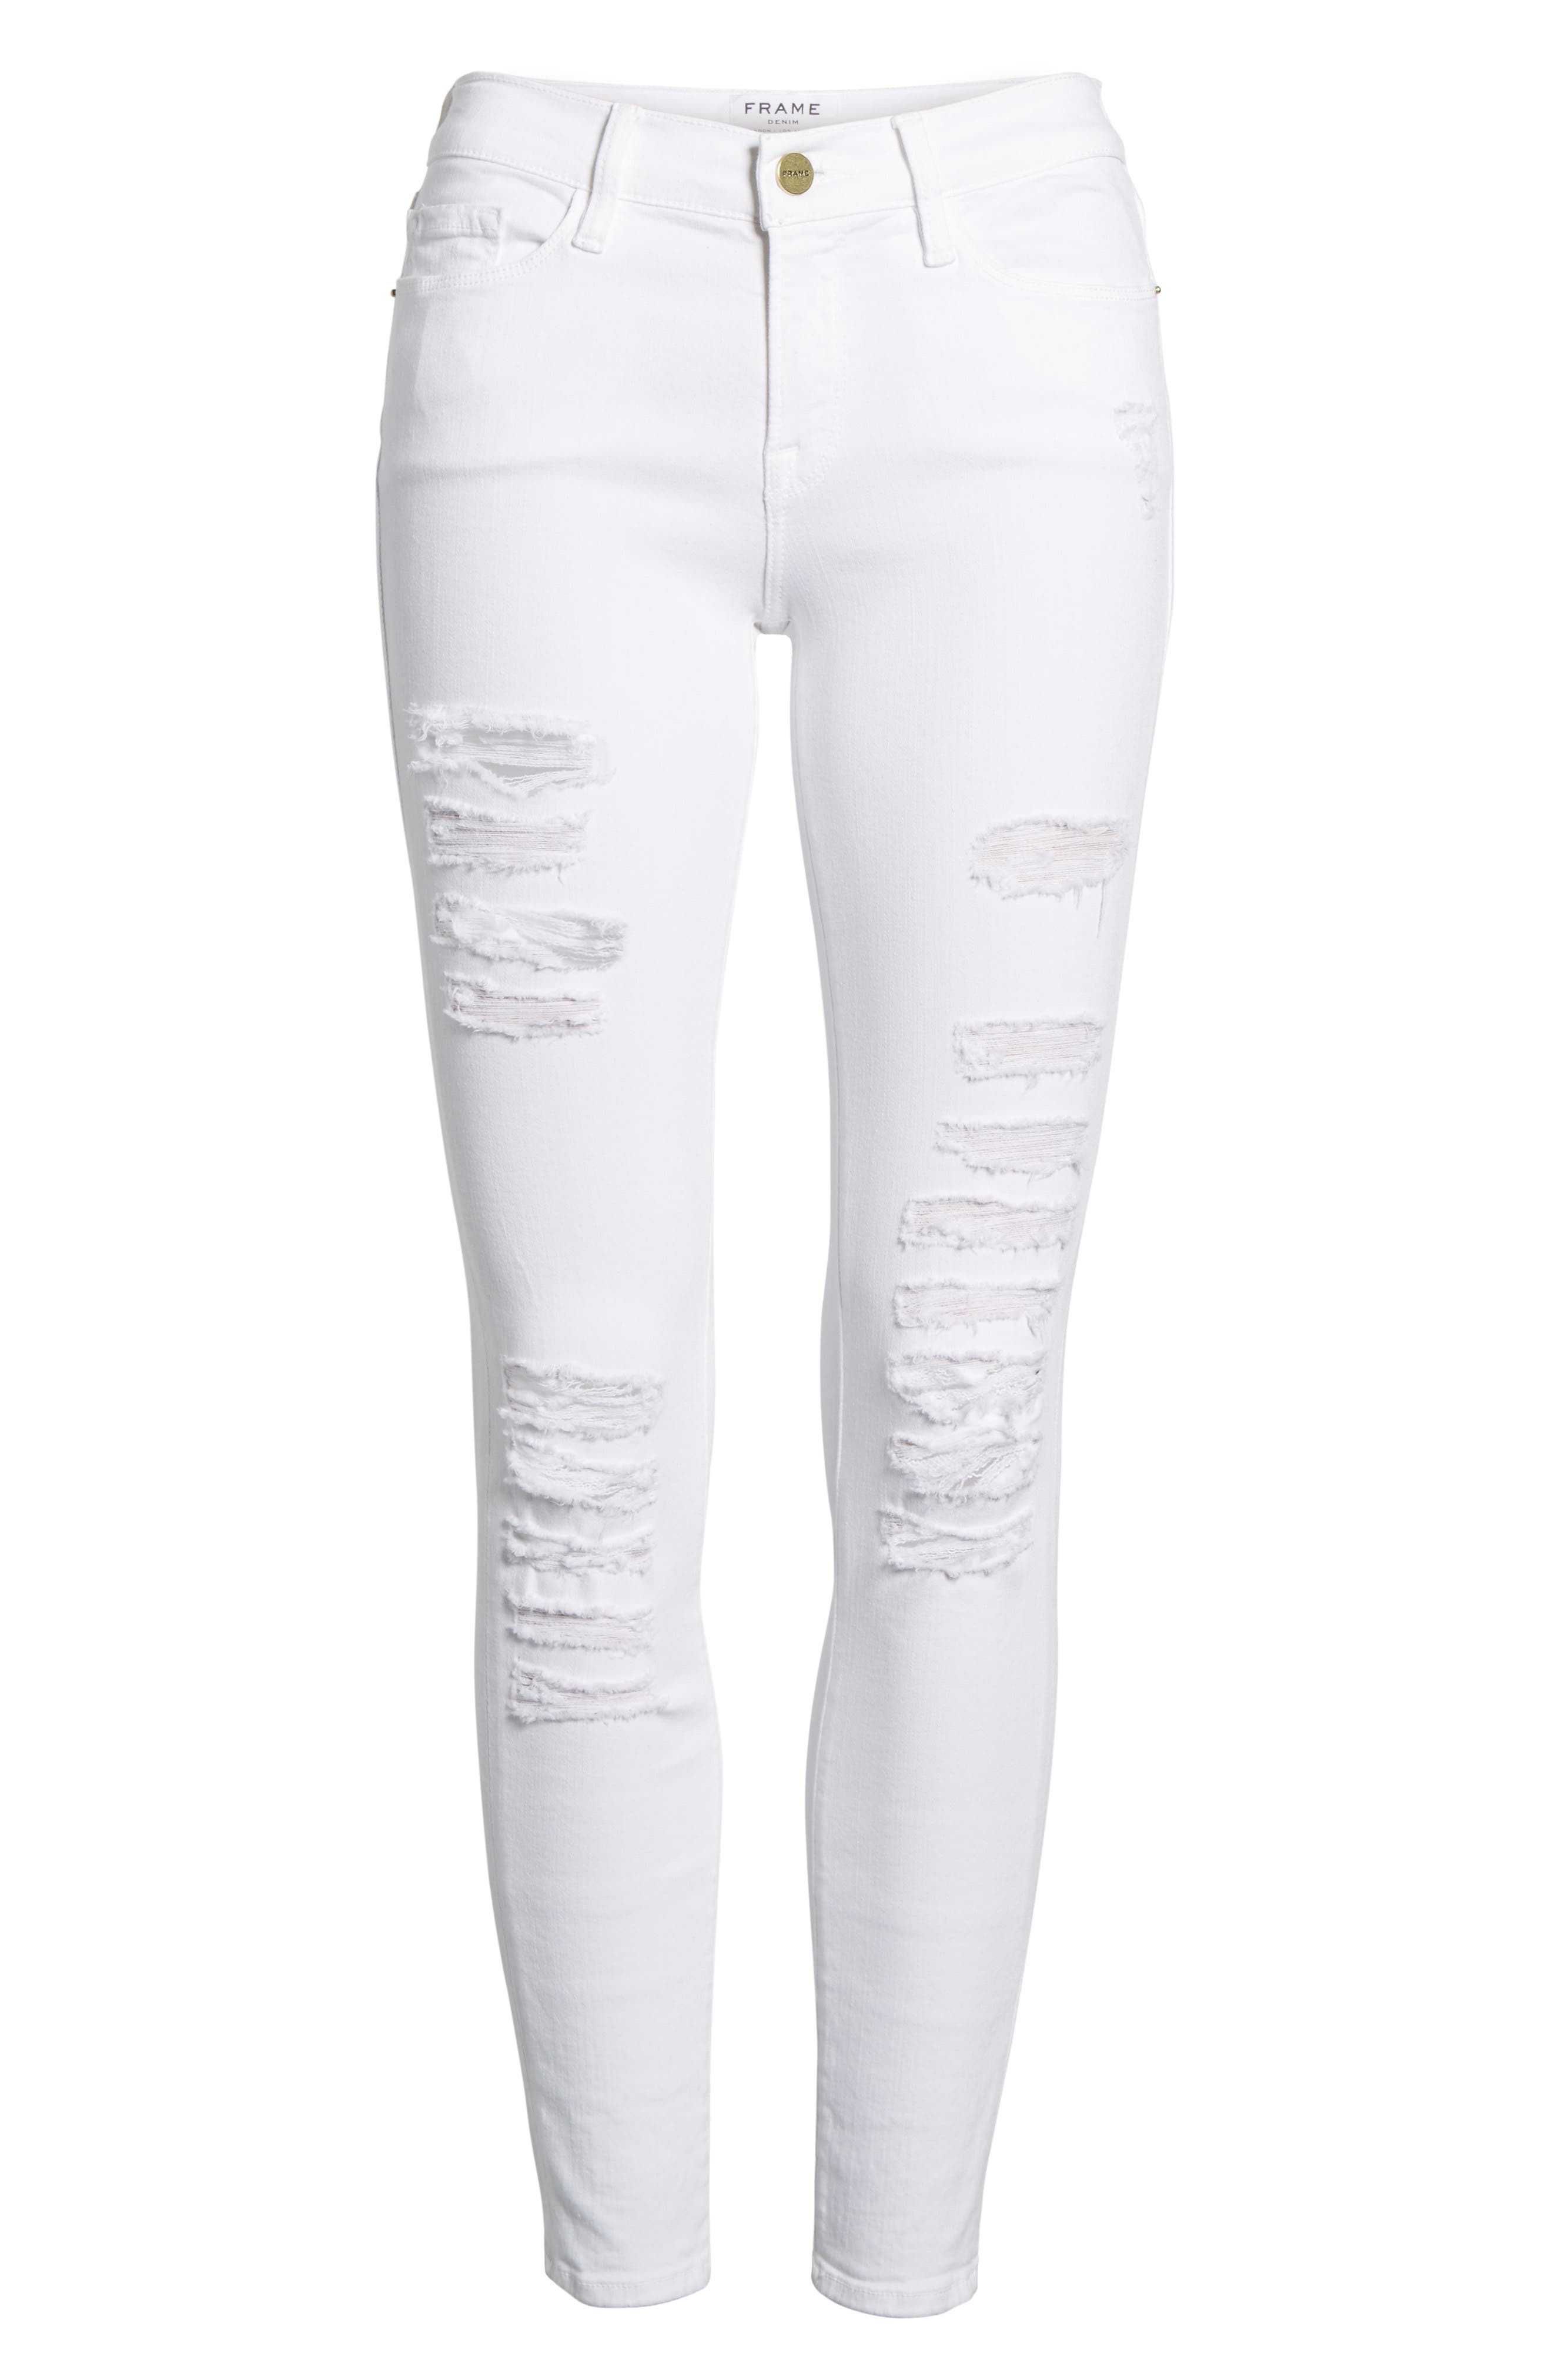 frame le color skinny jeans white